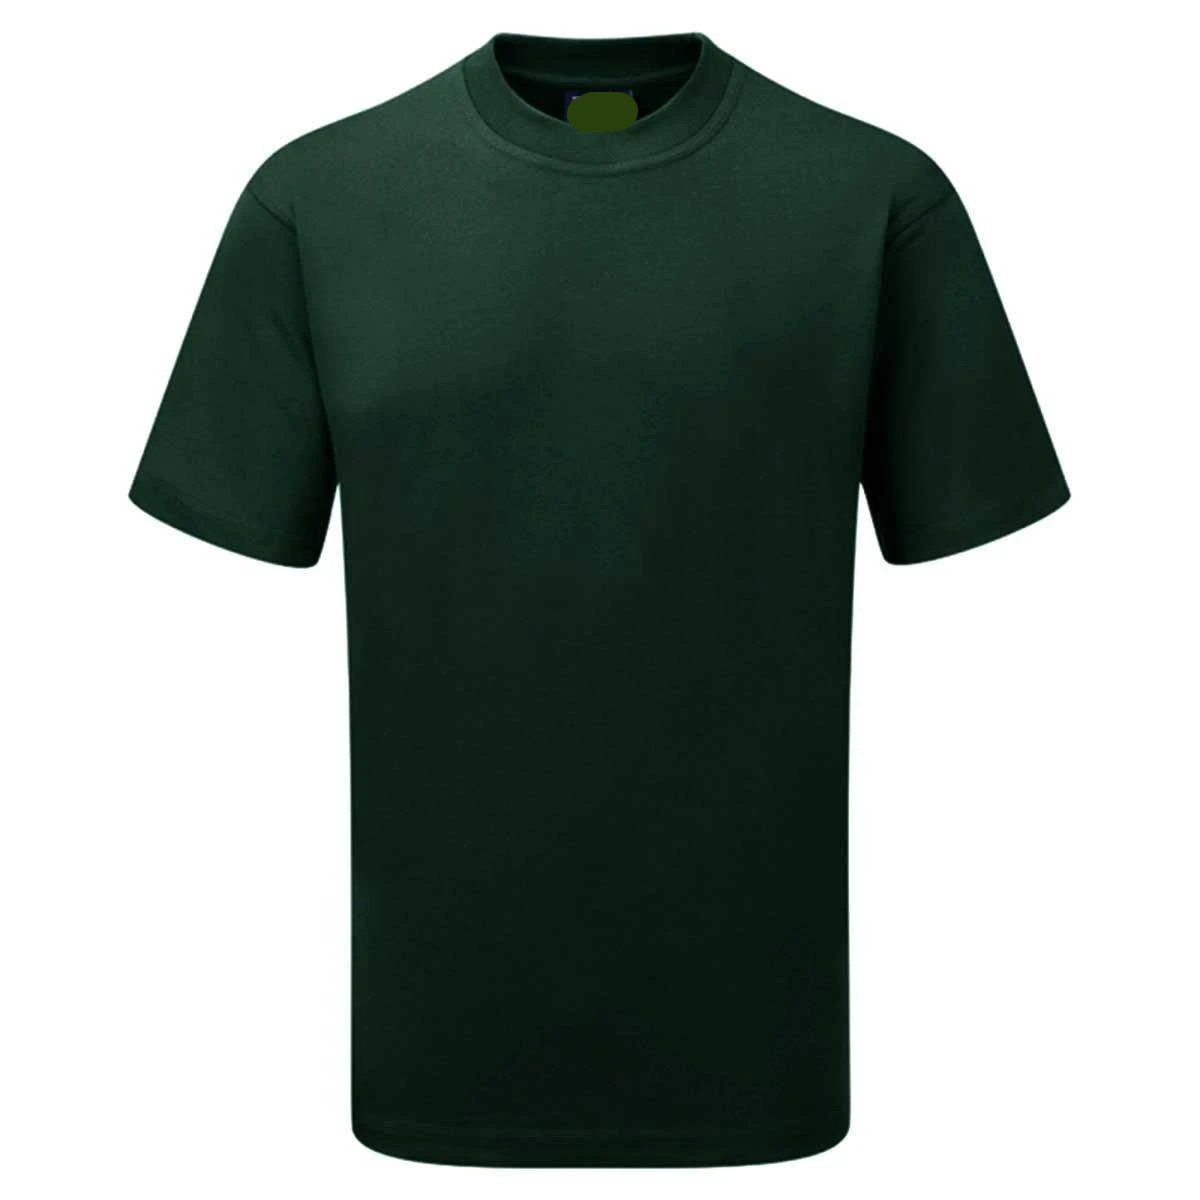 Jackson Solid Color Short Sleeve Tee Shirt Men's Tee Shirt Image 